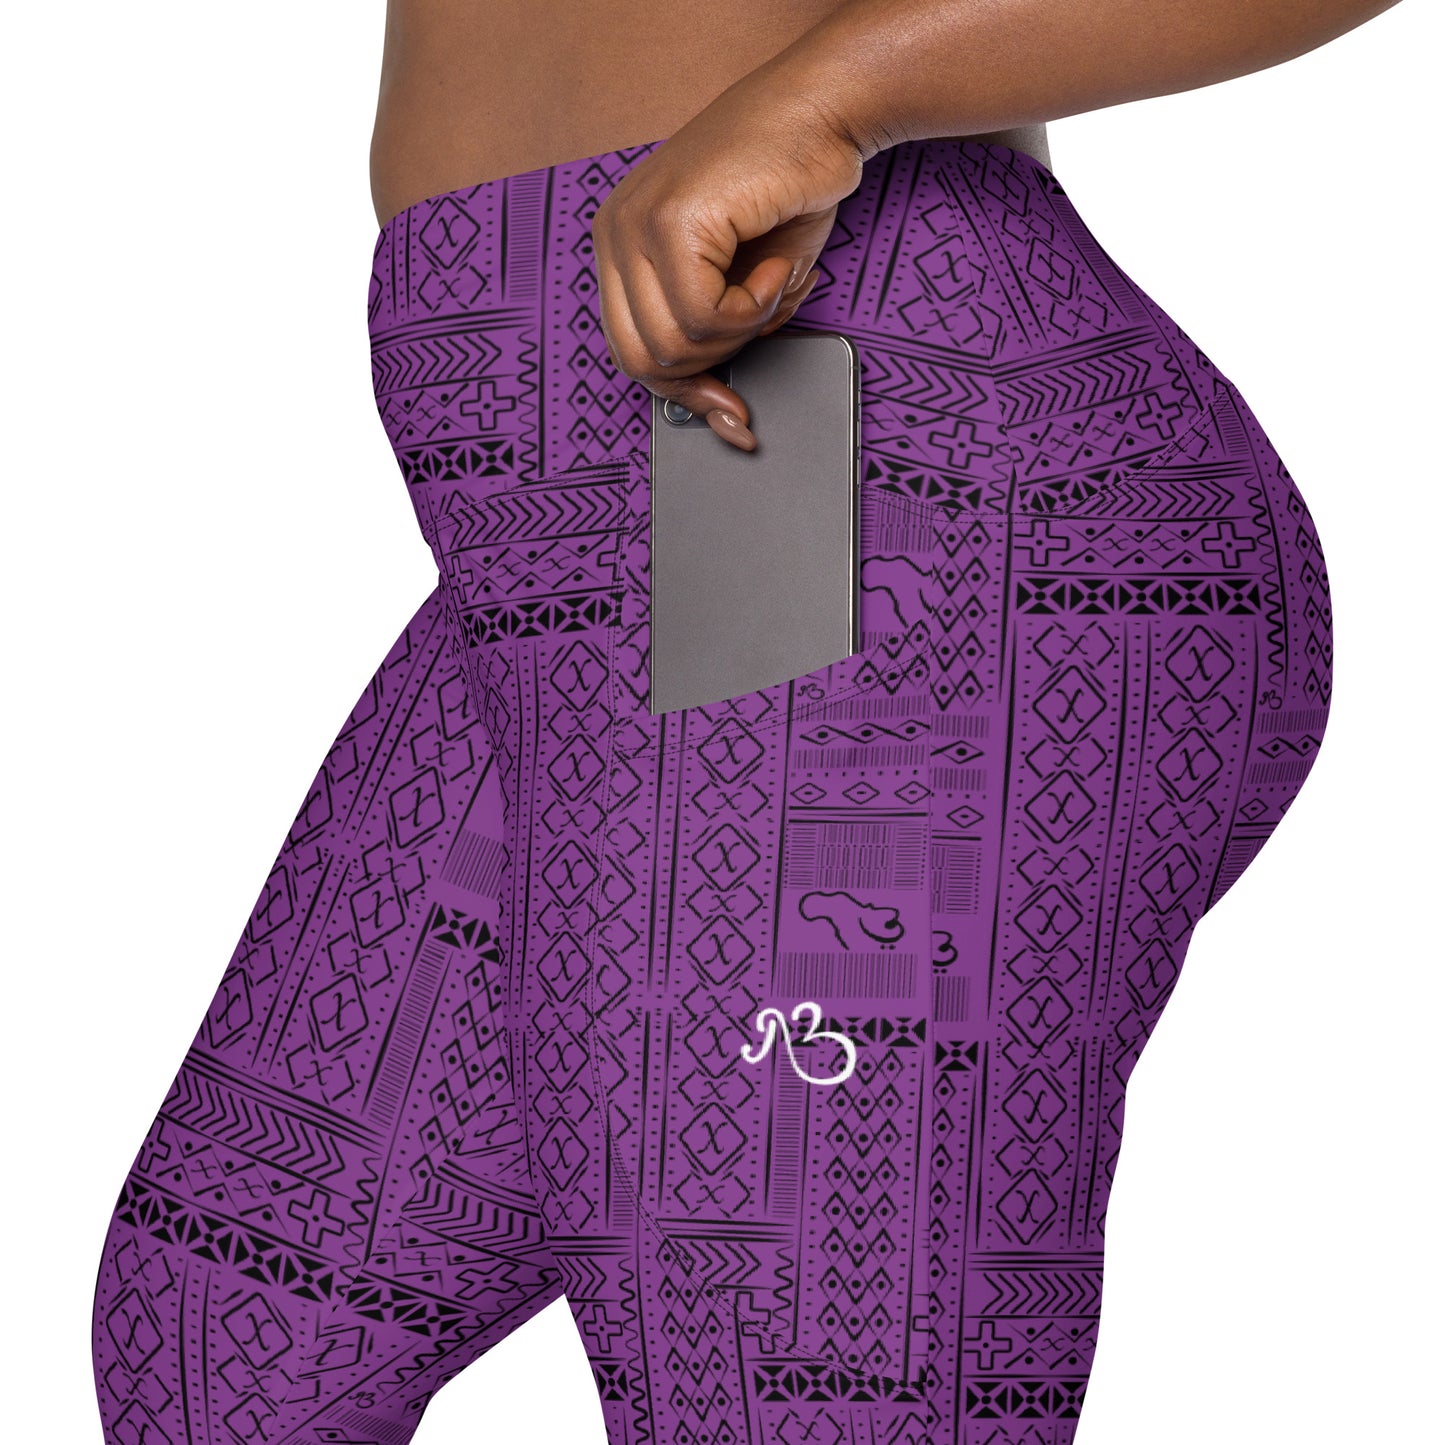 AfriBix Tribal Print High Waist Leggings with pockets